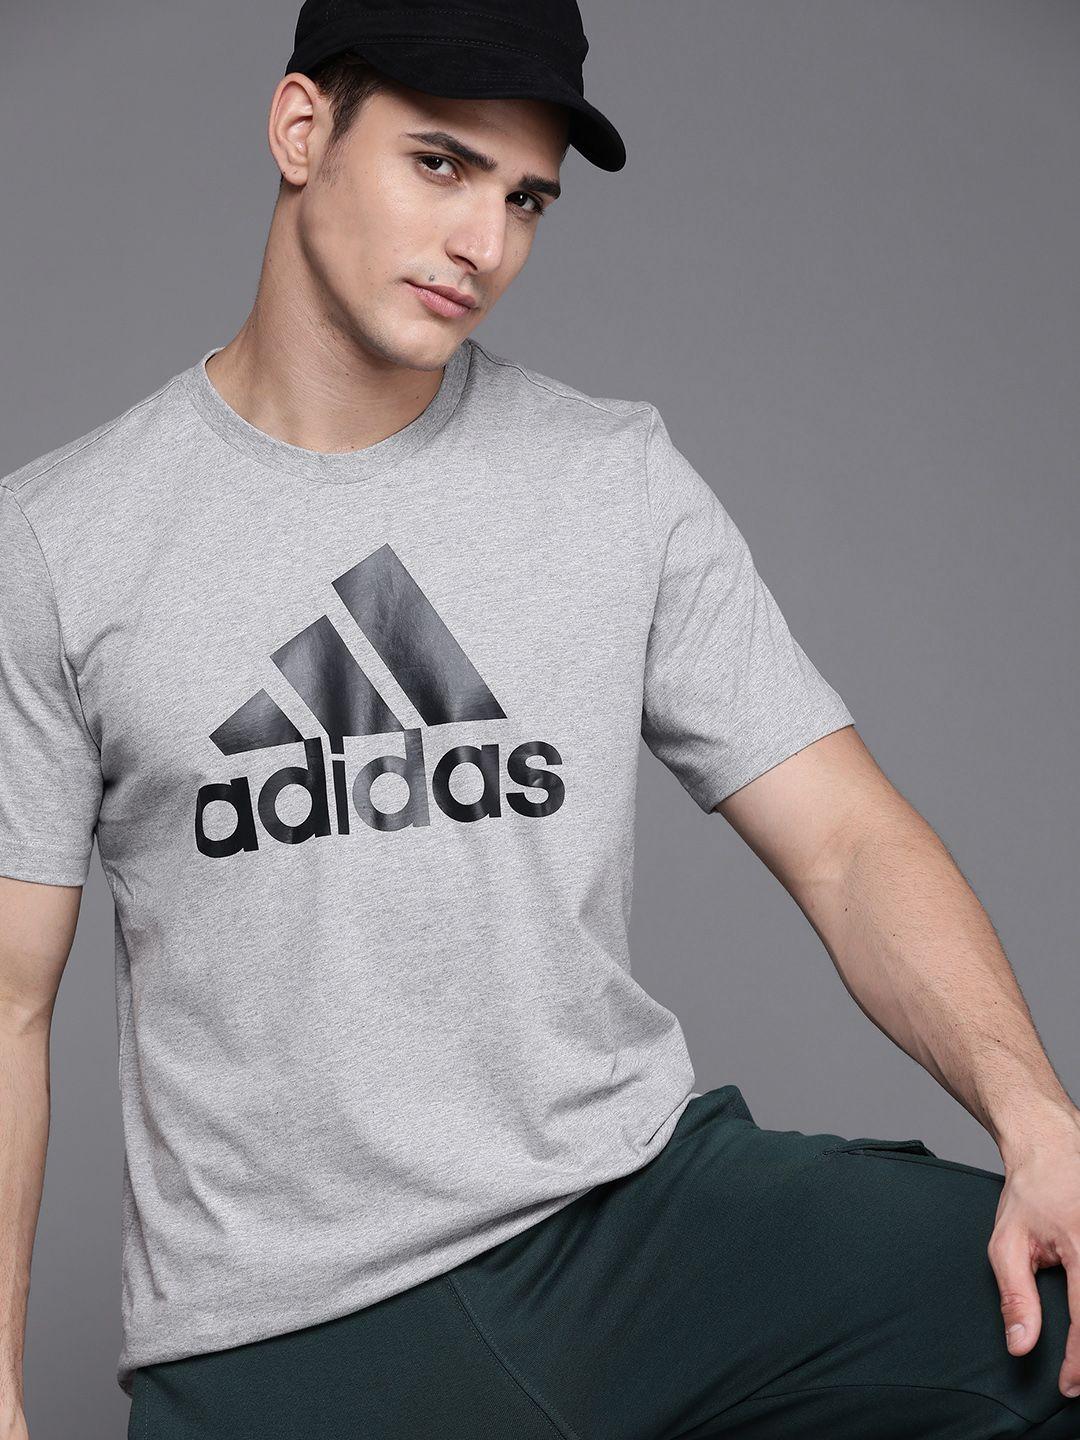 adidas men grey melange brand logo printed pure cotton sustainable t-shirt